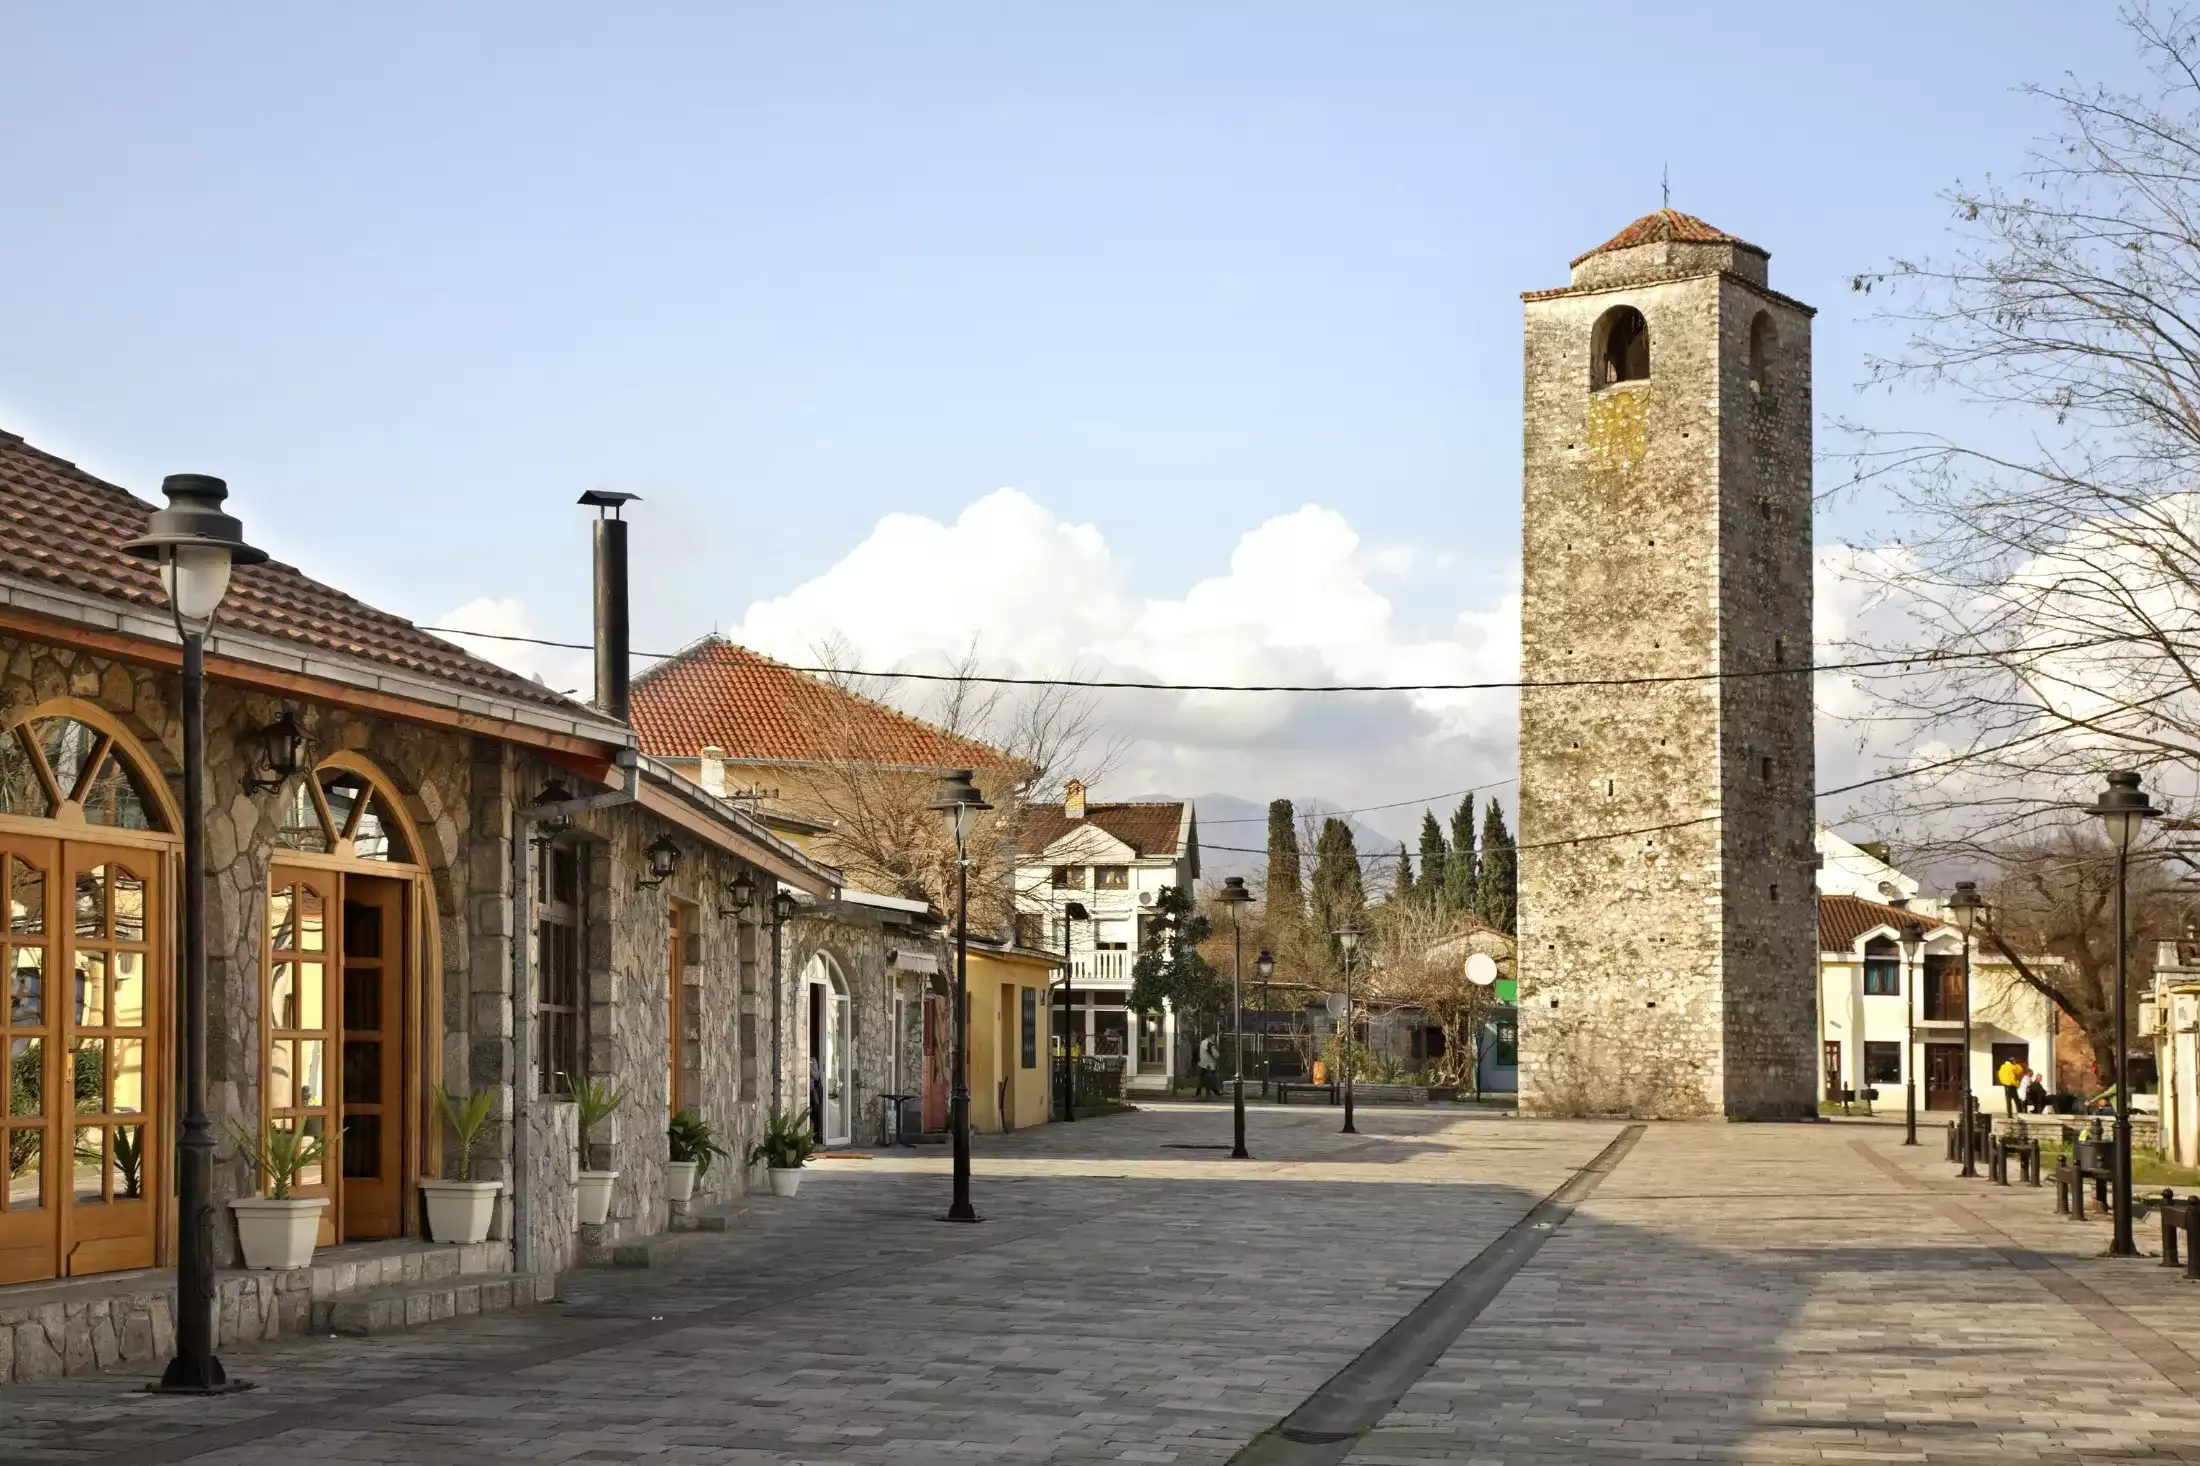 Ottoman clock tower in Podgorica, Montenegro.